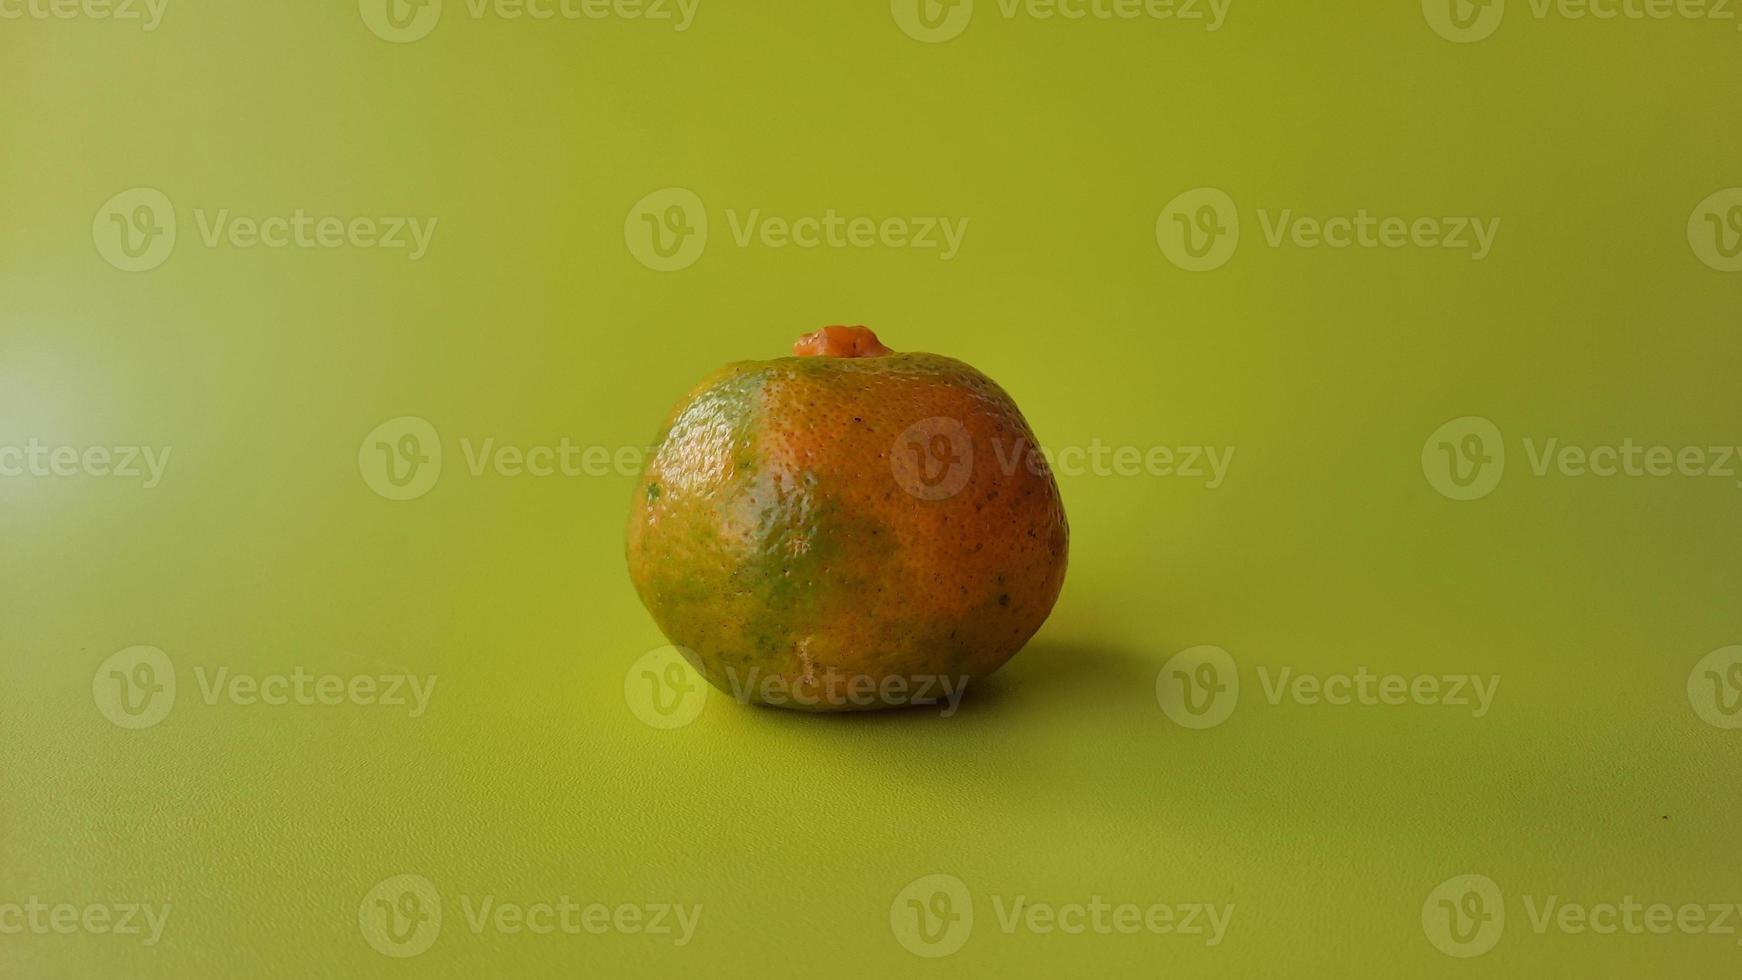 An orange on a yellow background photo